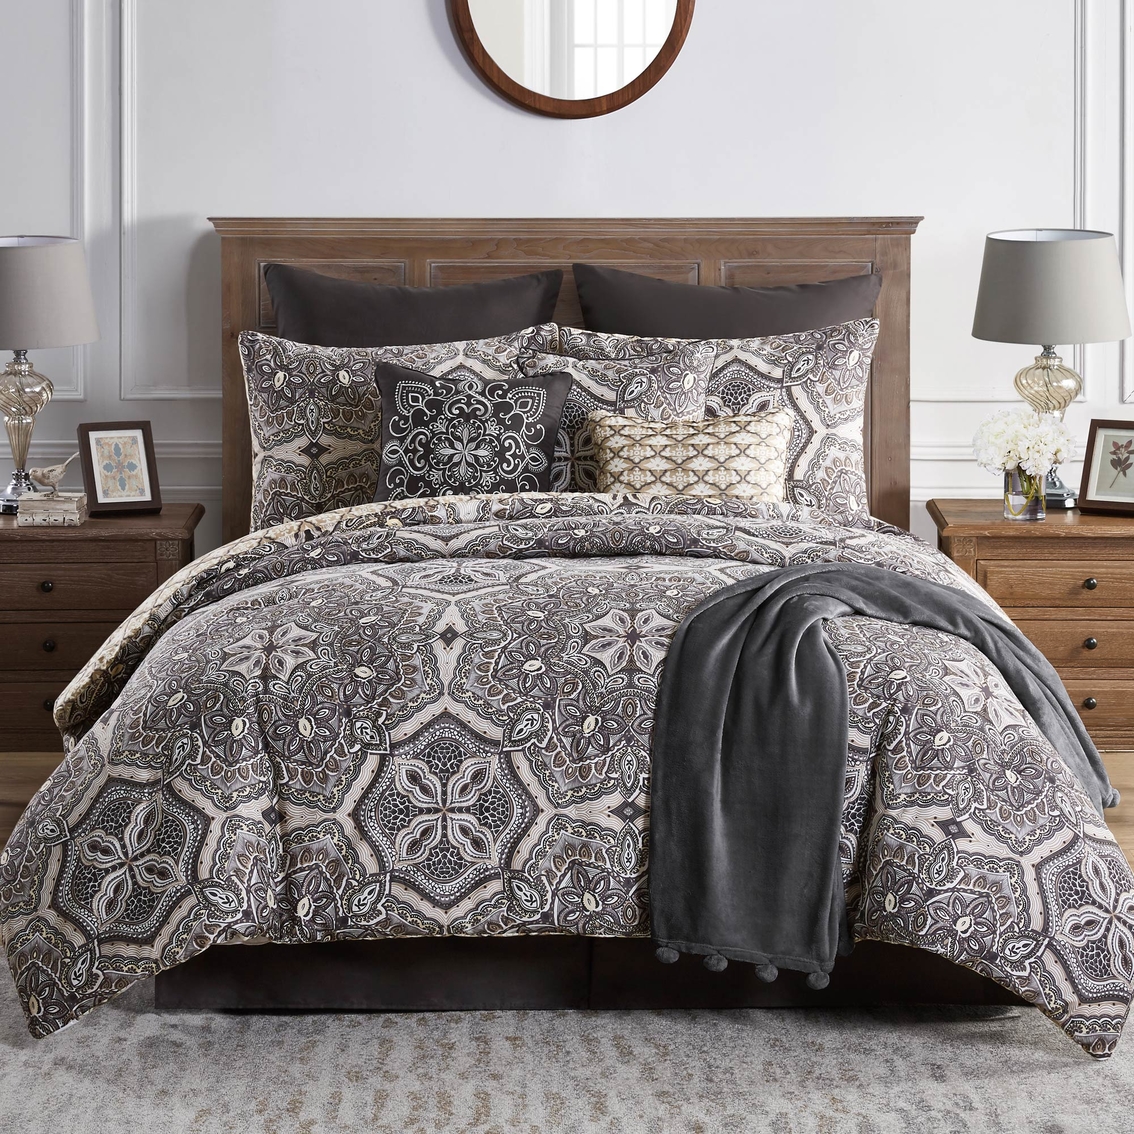 VCNY Home Belinda 12 Pc. Comforter Set - Image 3 of 3